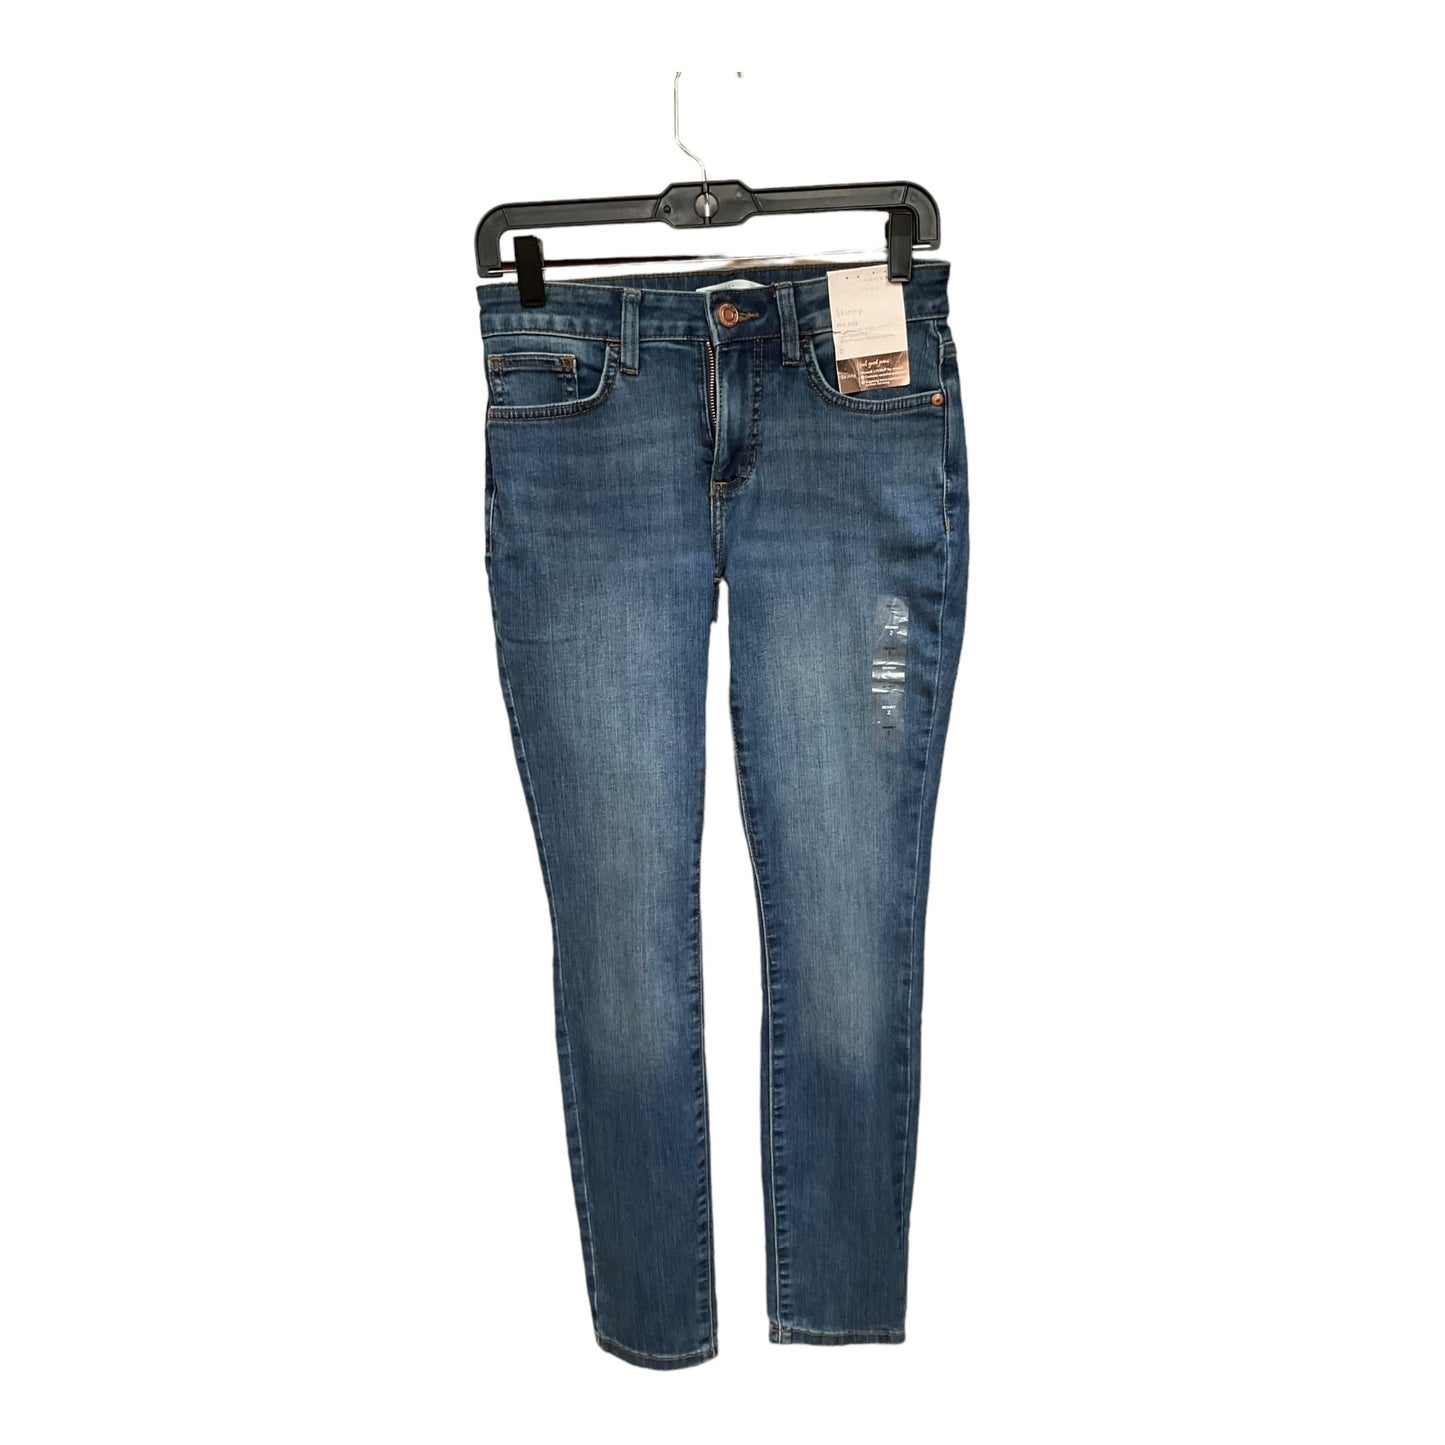 Denim Jeans Skinny Lc Lauren Conrad, Size 2